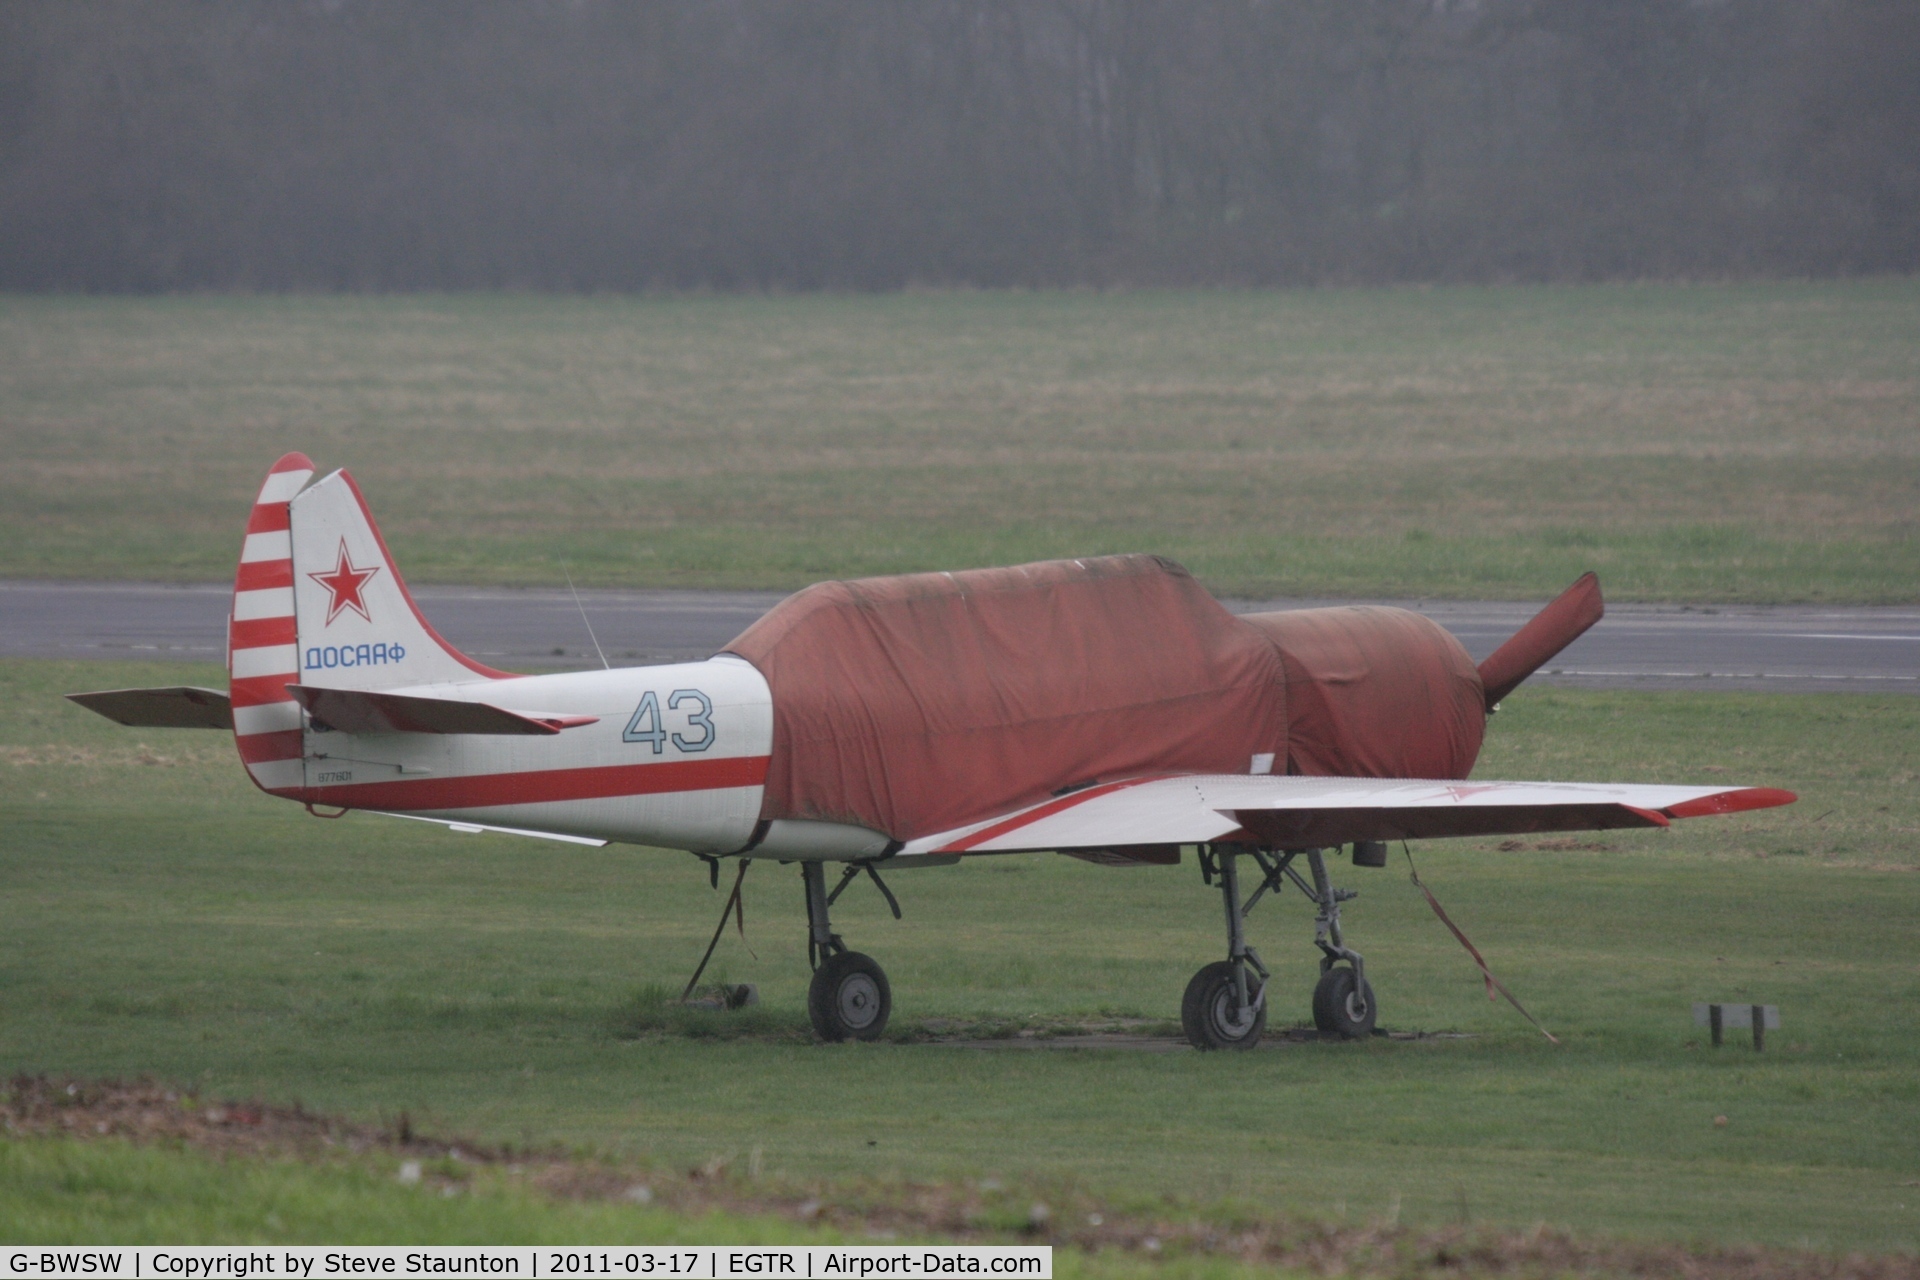 G-BWSW, 1986 Bacau Yak-52 C/N 866807, Taken at Elstree Airfield March 2011